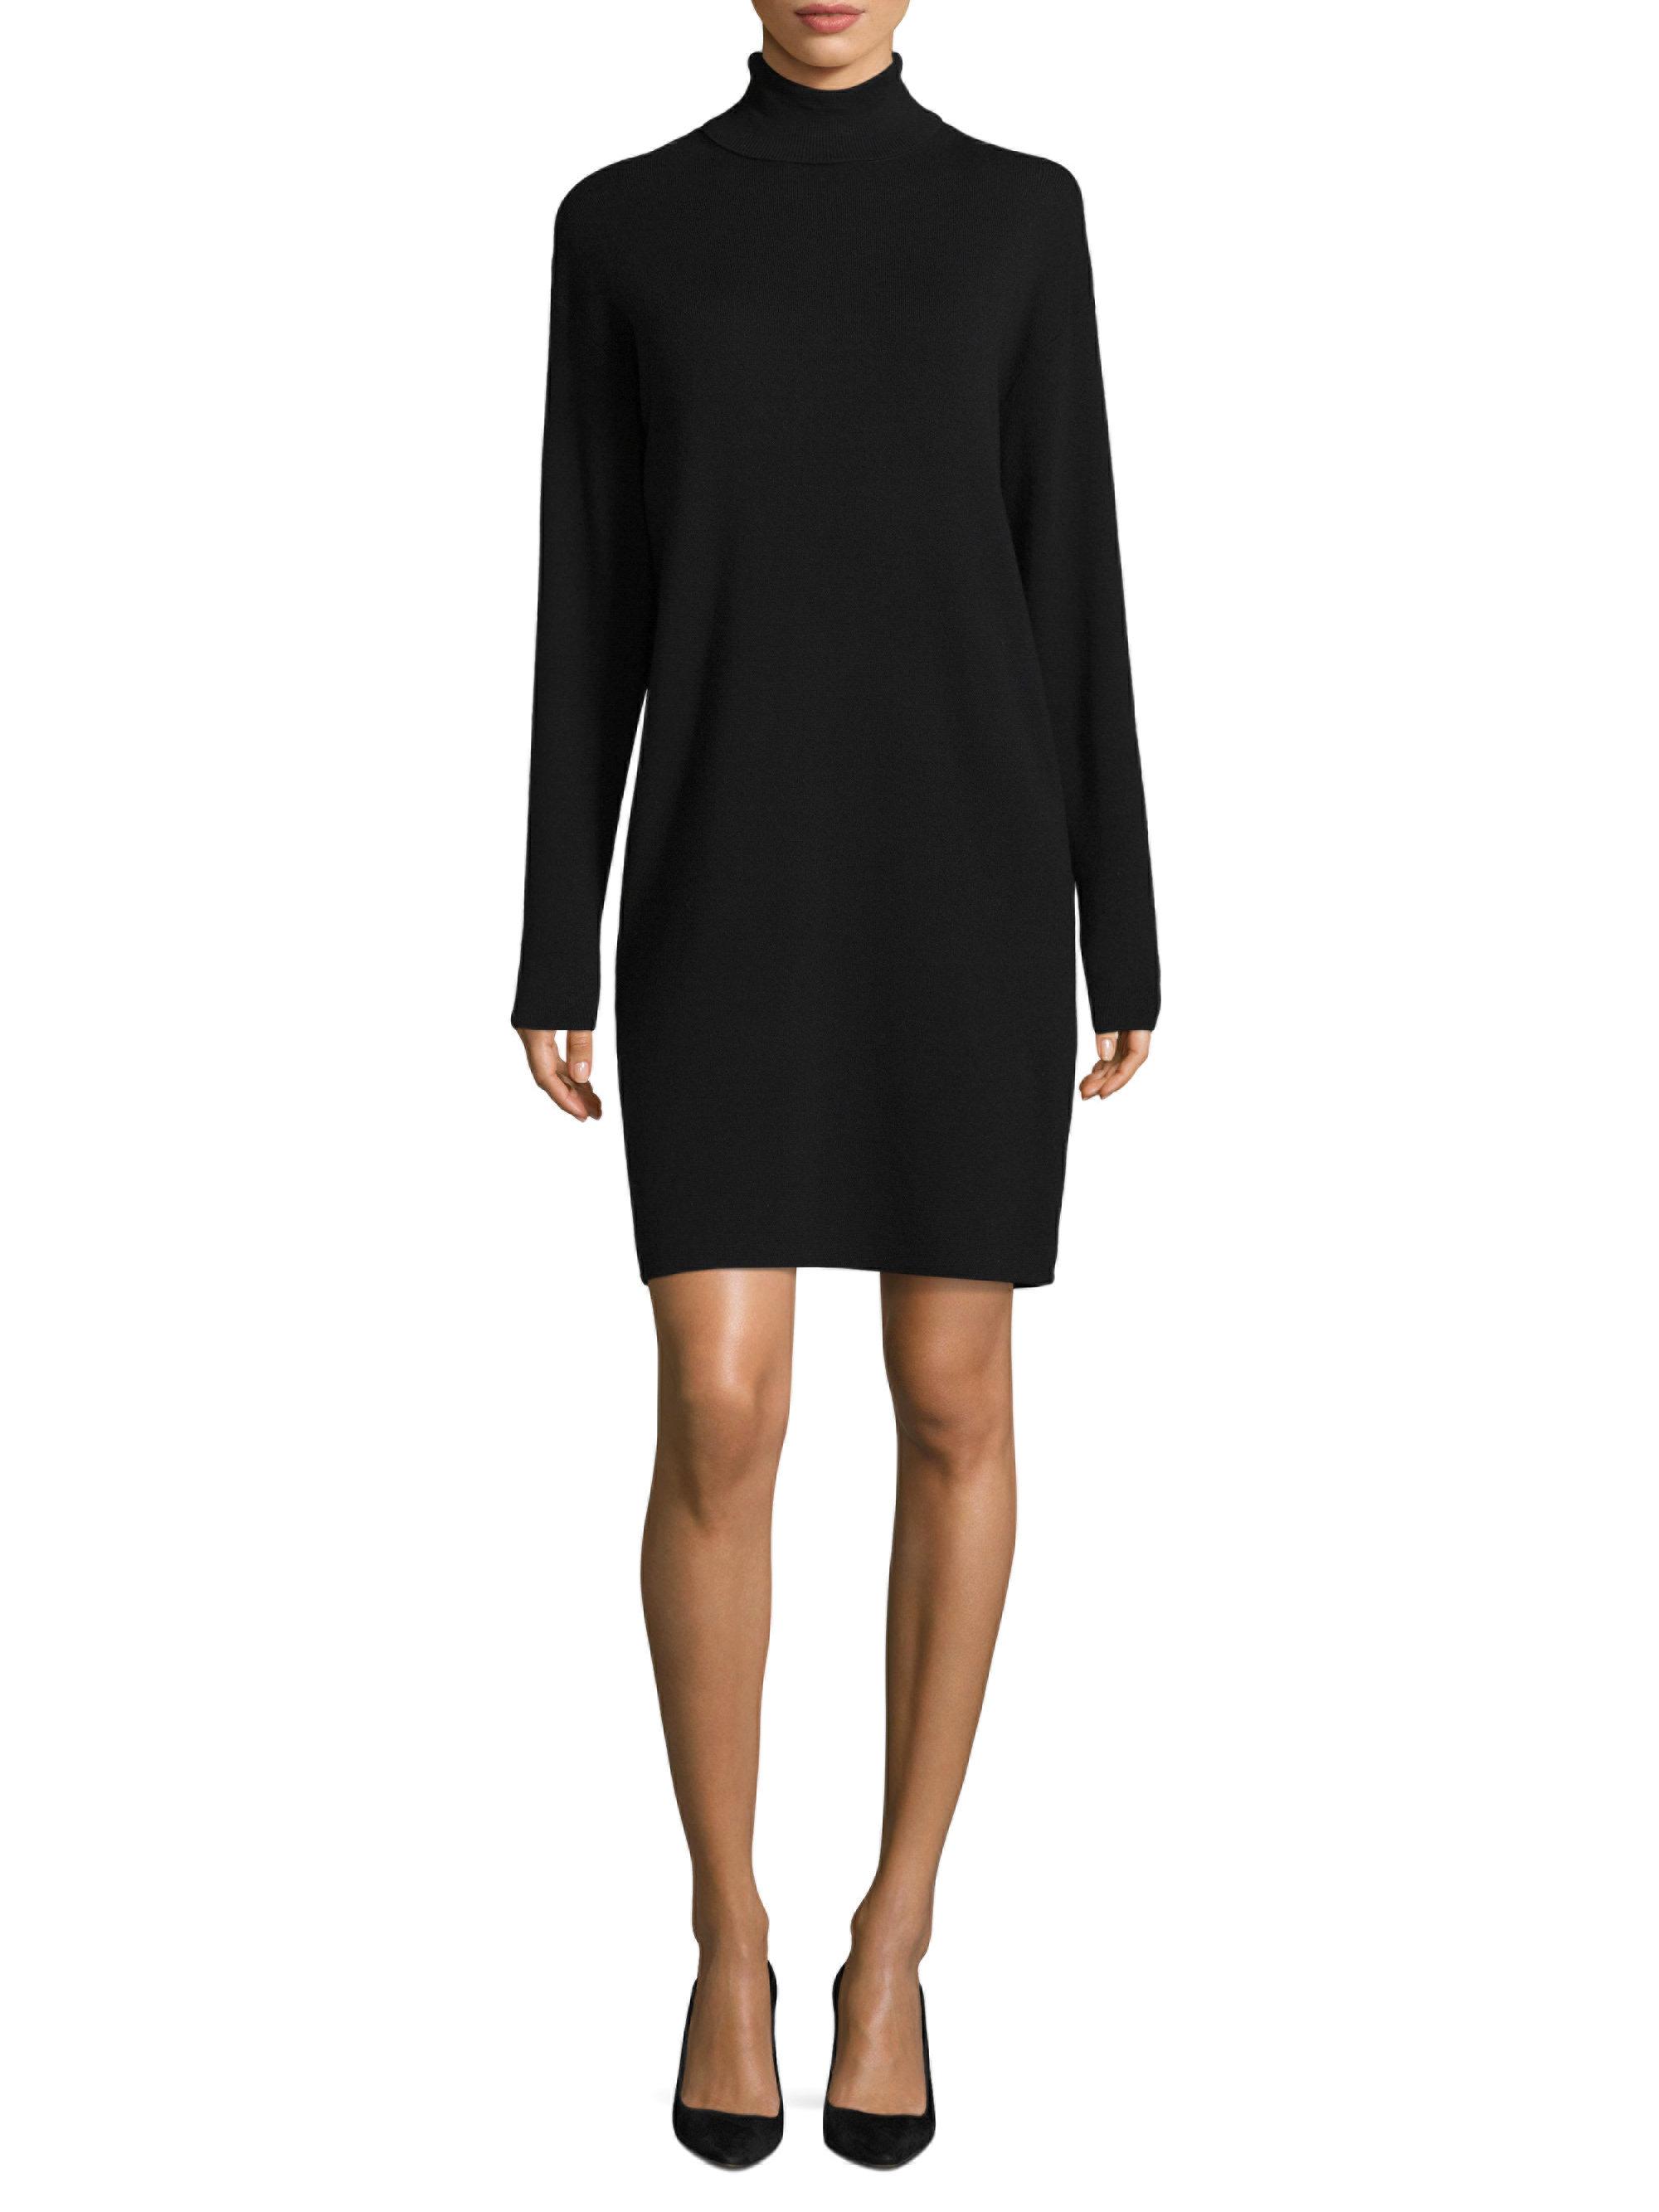 MICHAEL Michael Kors Synthetic Turtleneck Sweater Dress in Black - Lyst